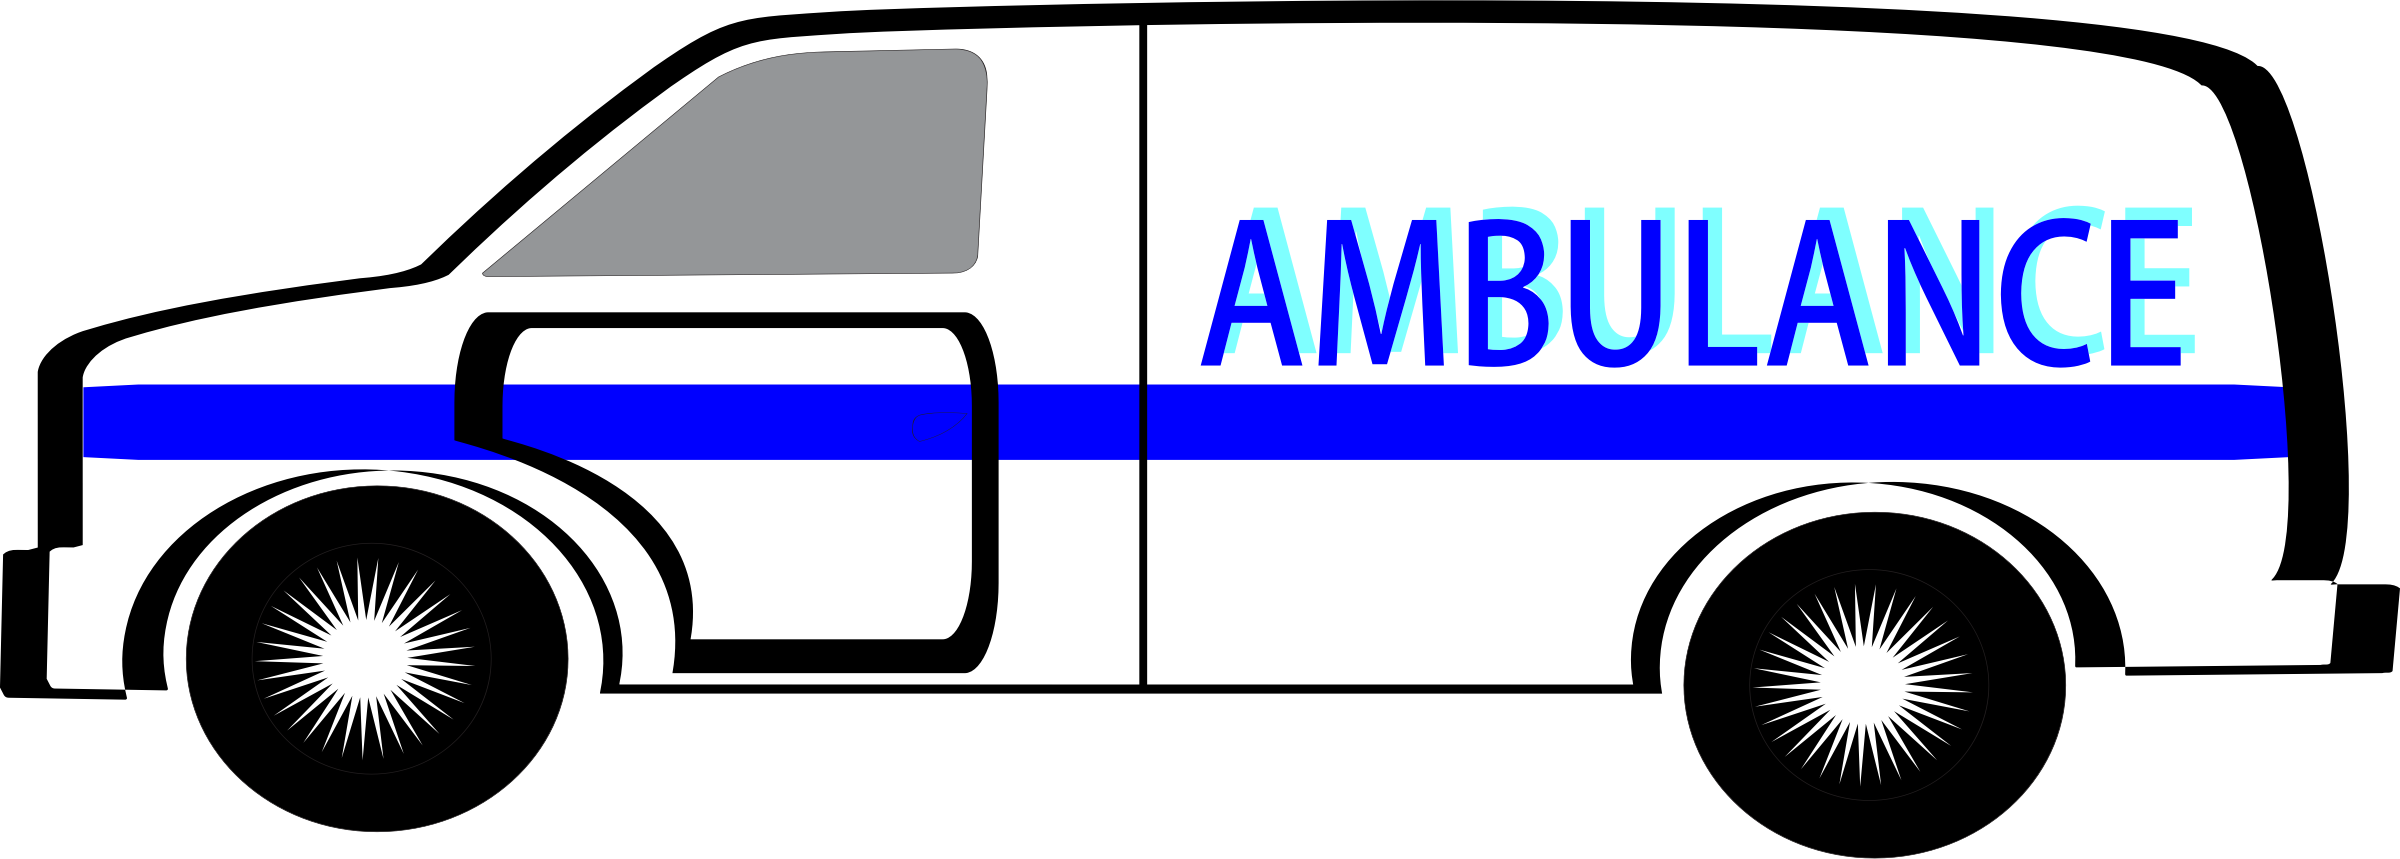 Ambulance Svg Library - Ambulance Clipart (2400x859), Png Download